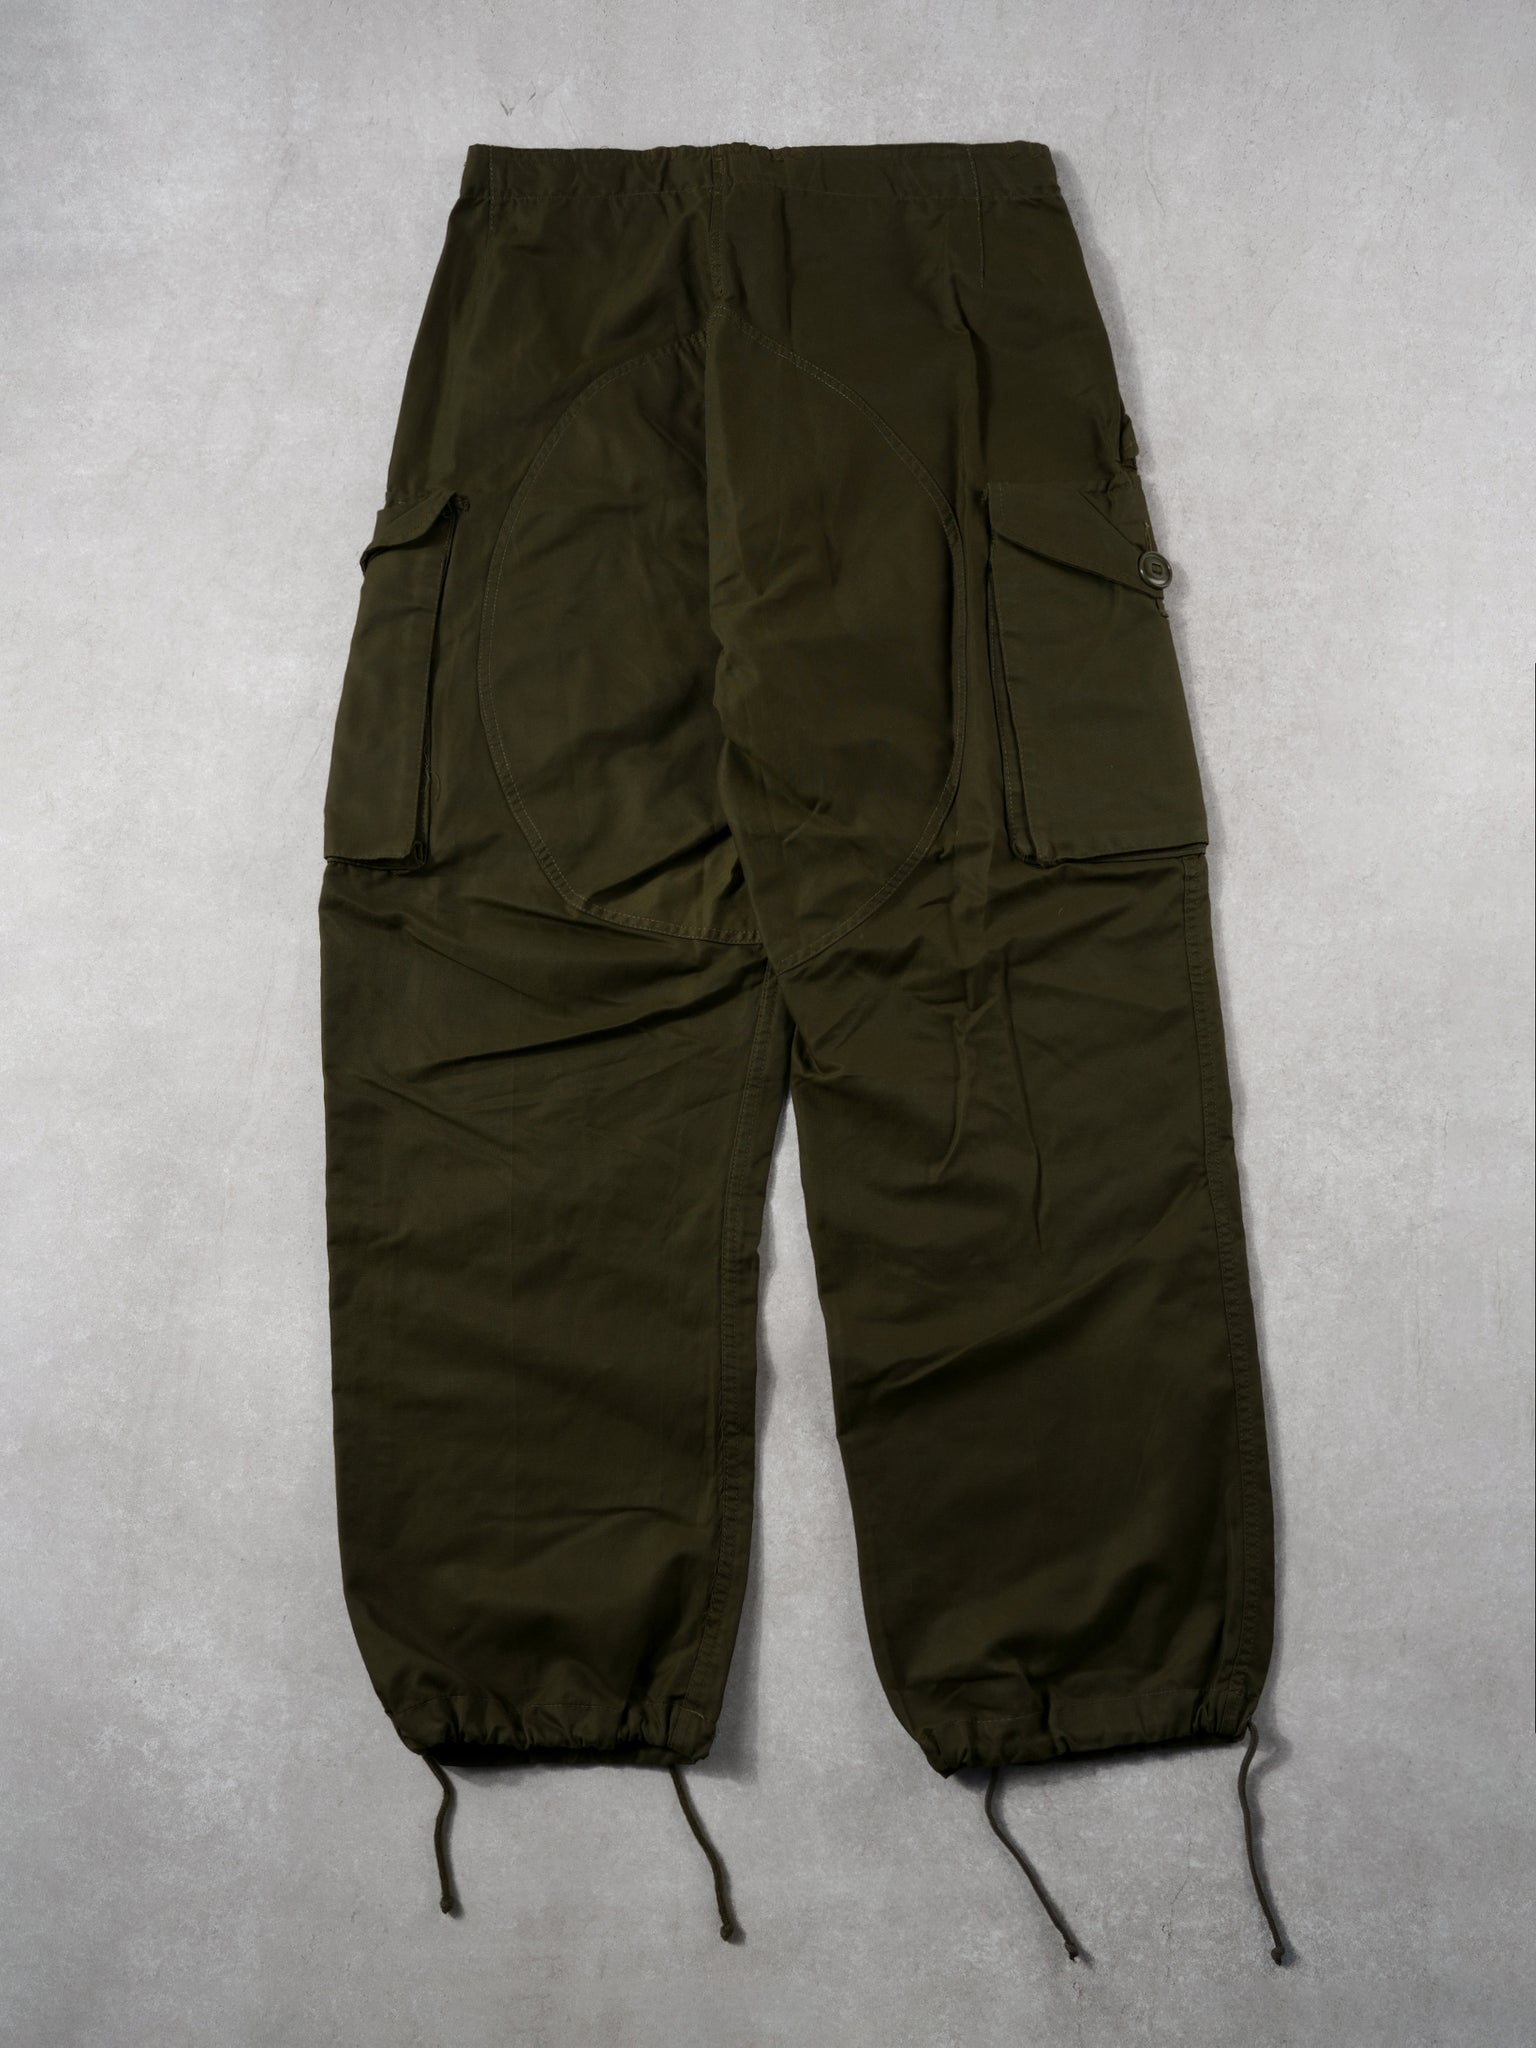 Vintage 70s Green Army Parachute Pant (28~34x31)